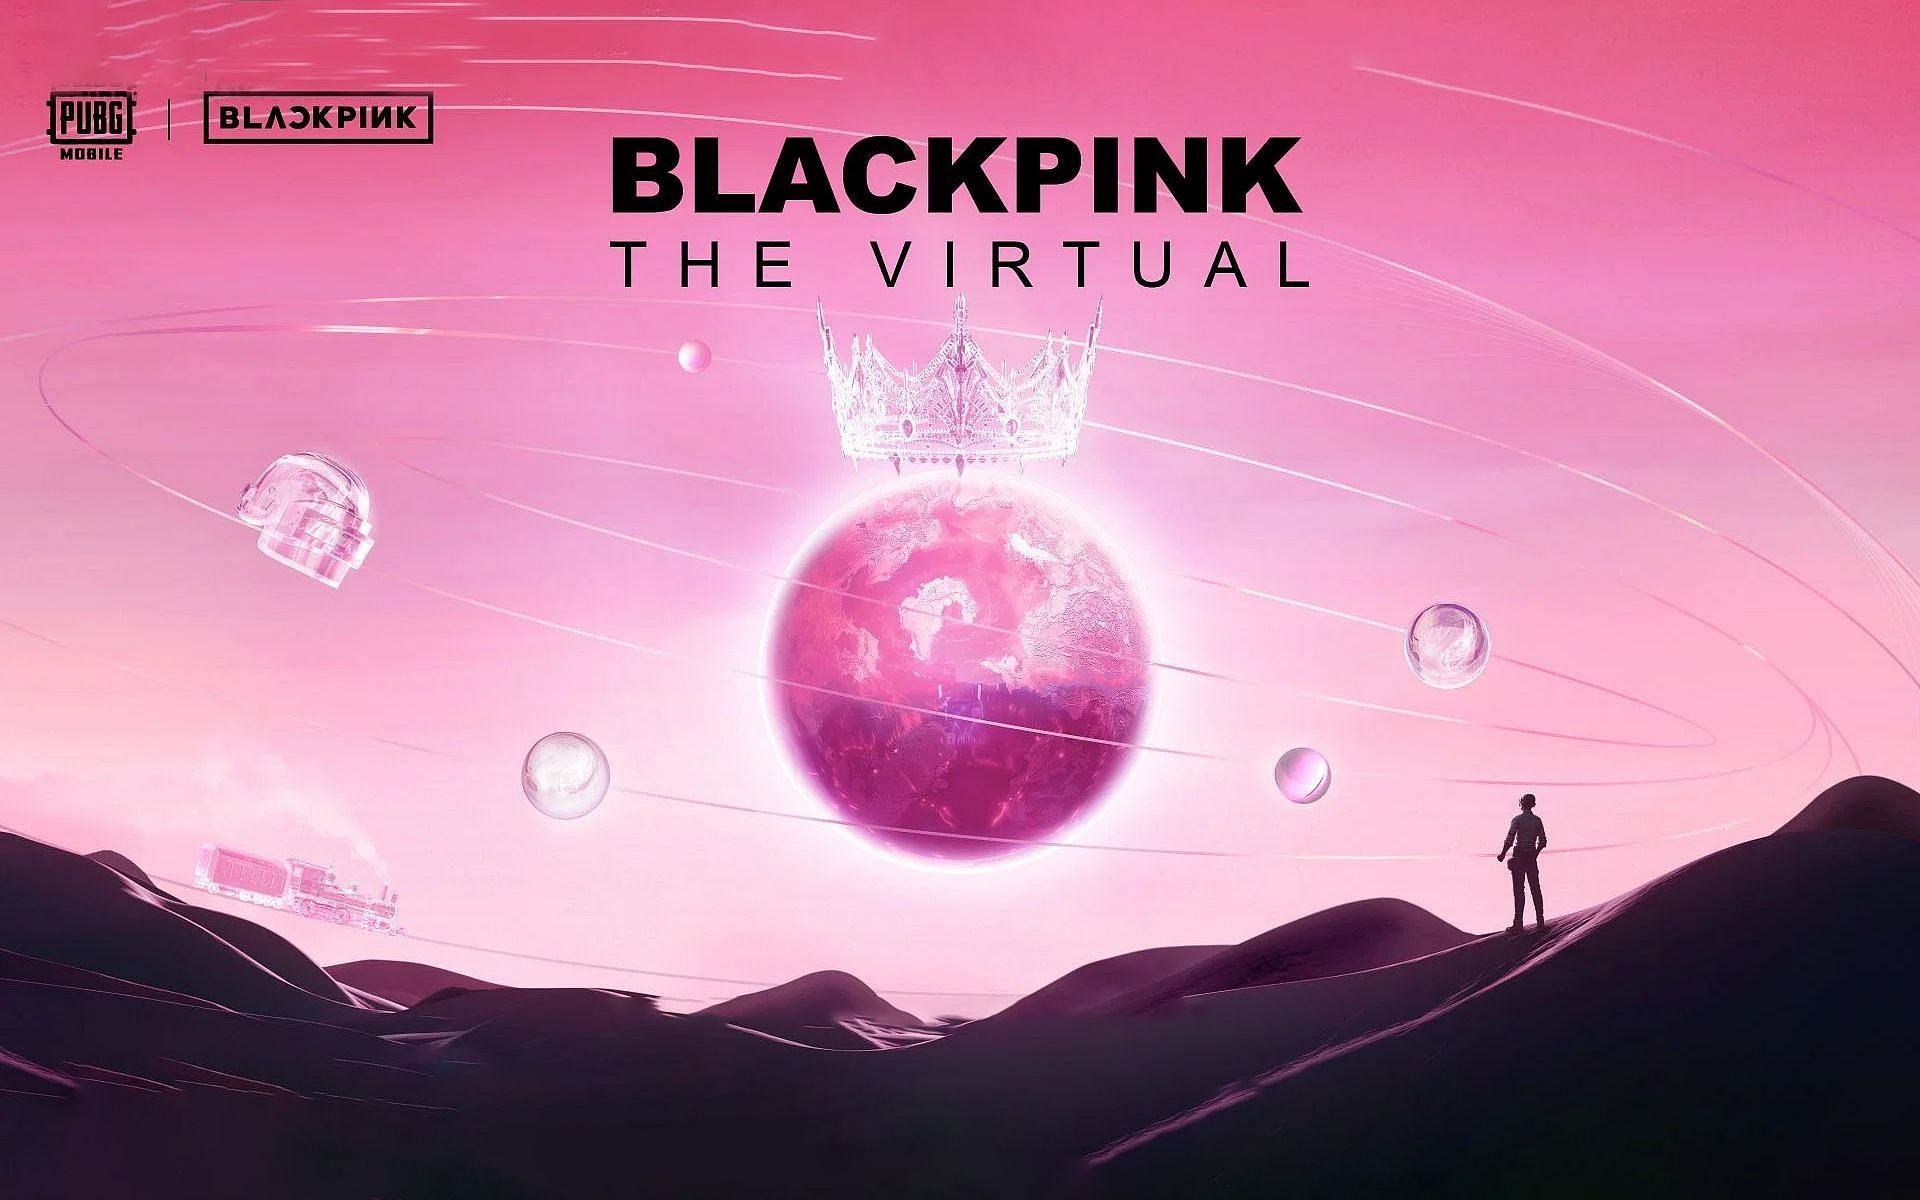 PUBG Mobile is collaborating with K-pop band BLACKPINK (Image via Krafton)